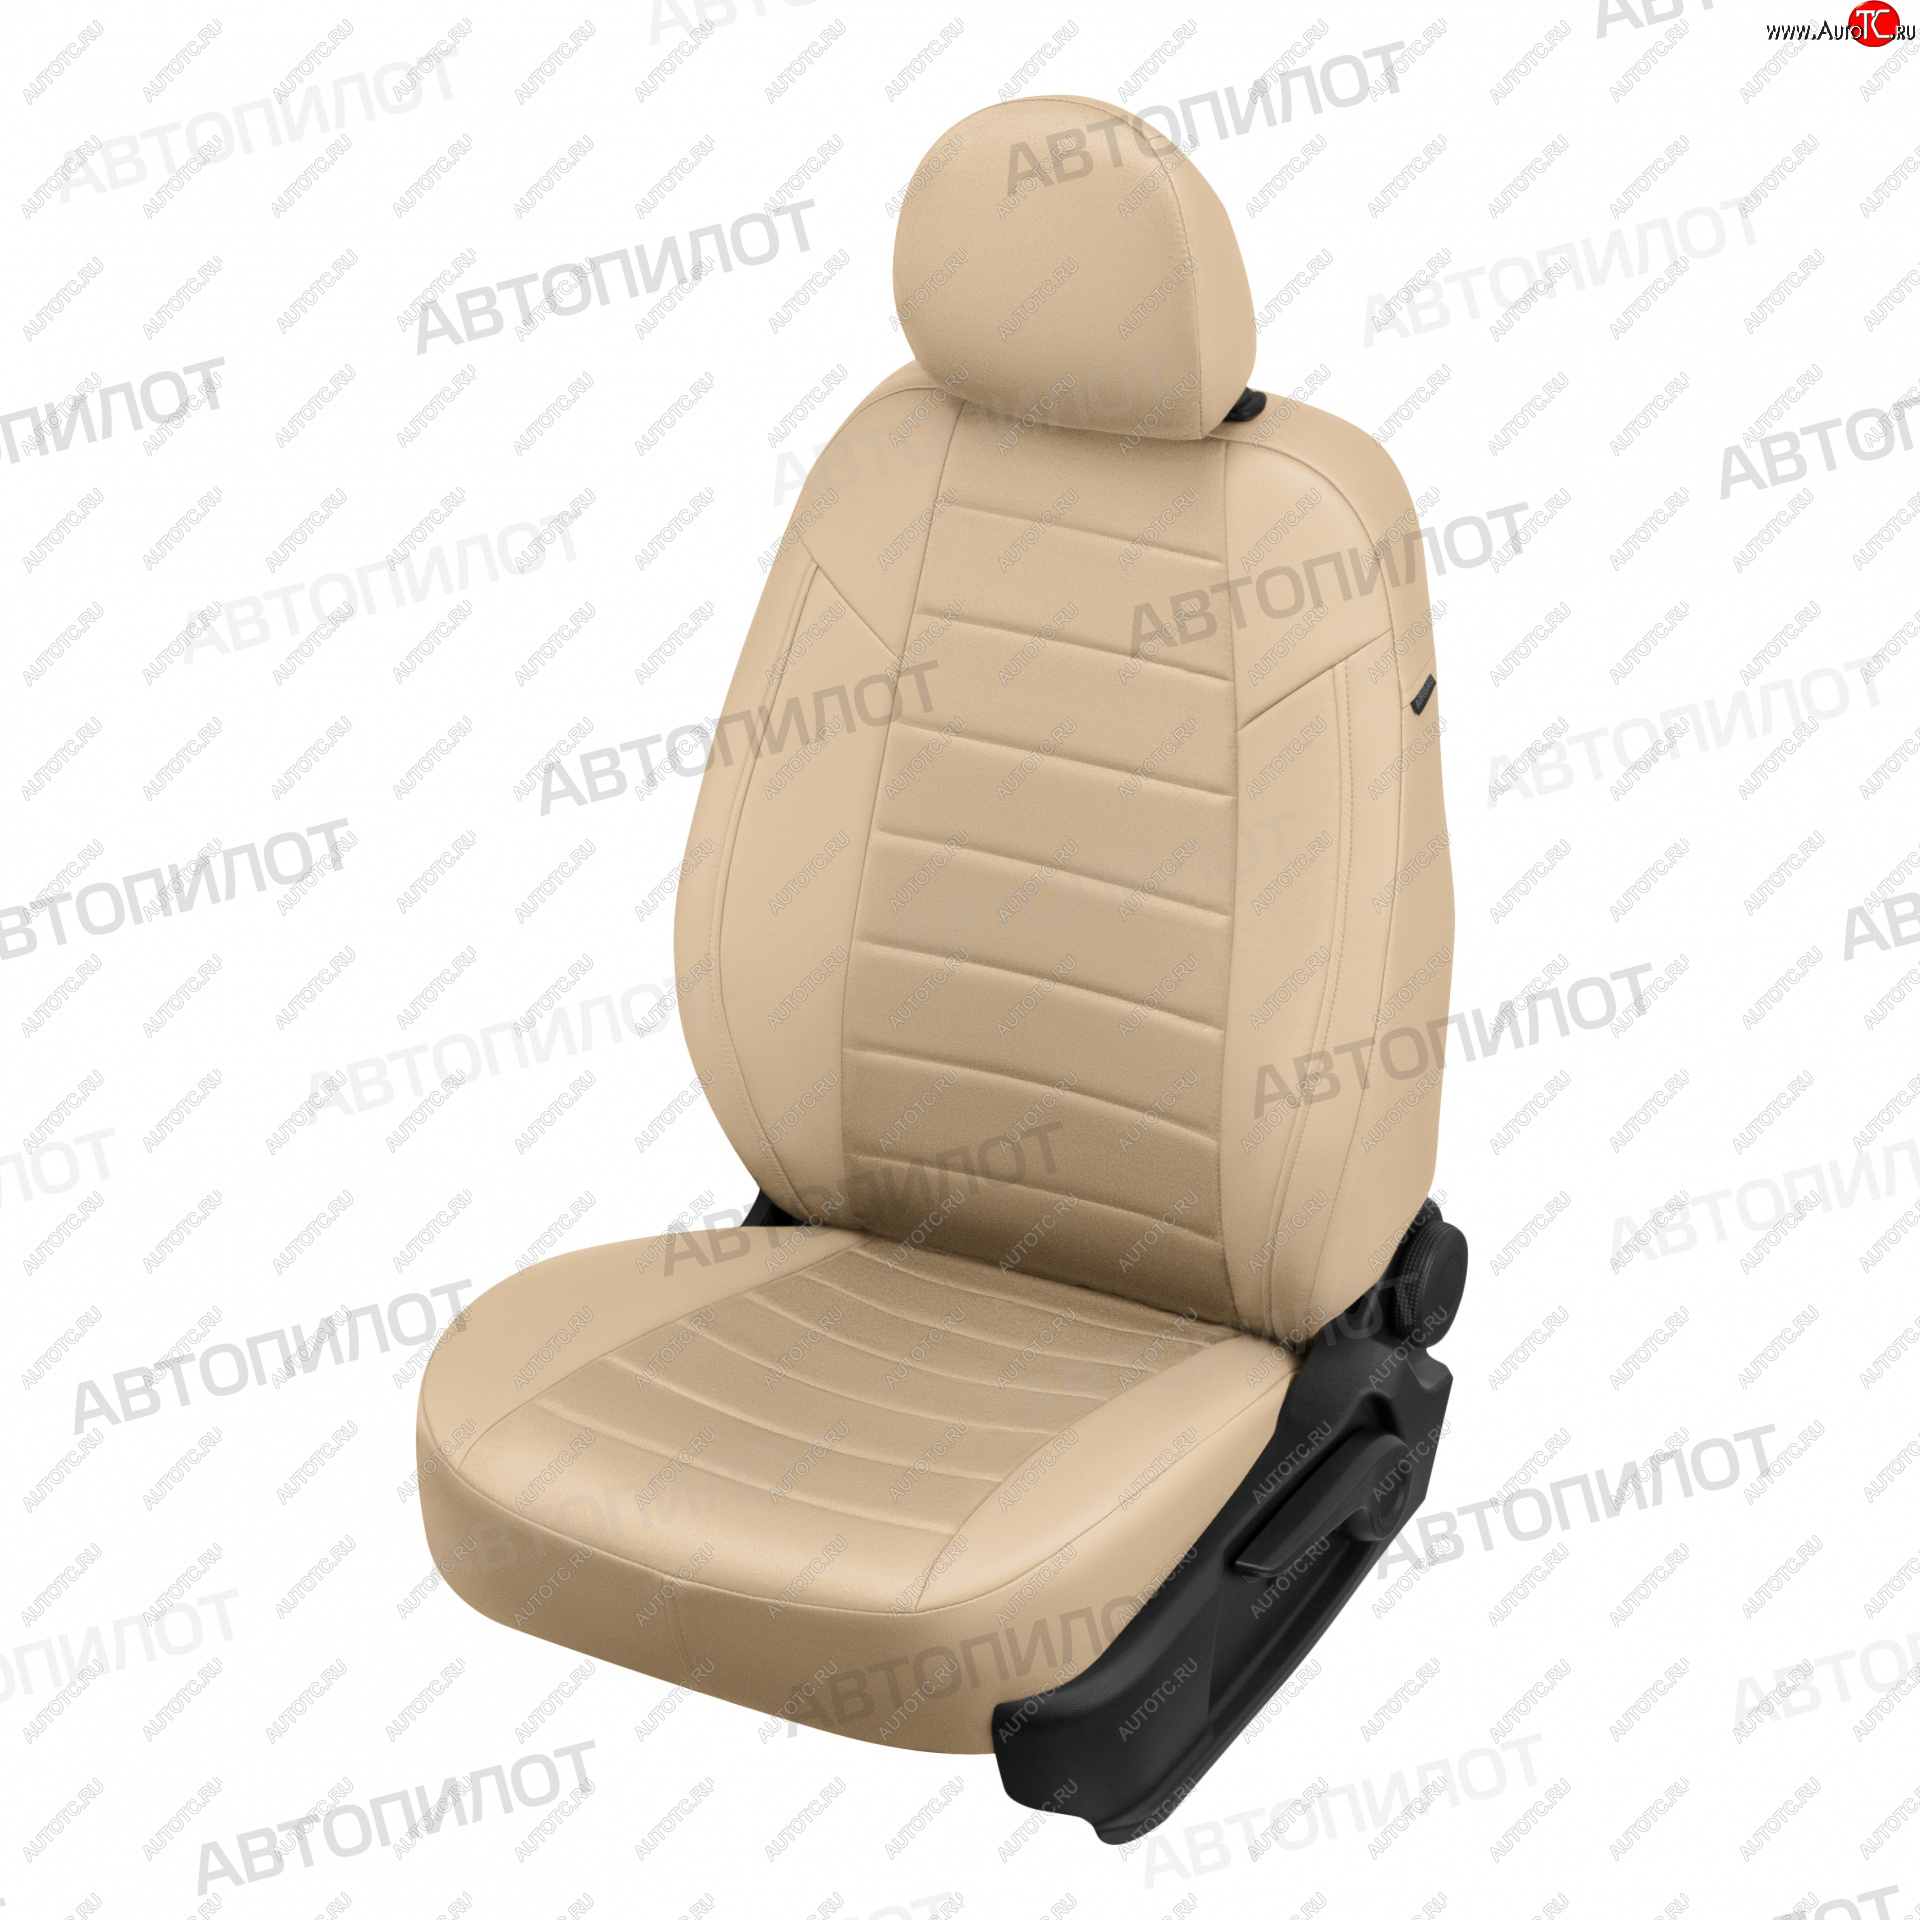 13 449 р. Чехлы сидений (экокожа) Автопилот  Hyundai Sonata  YF (2009-2014) (бежевый)